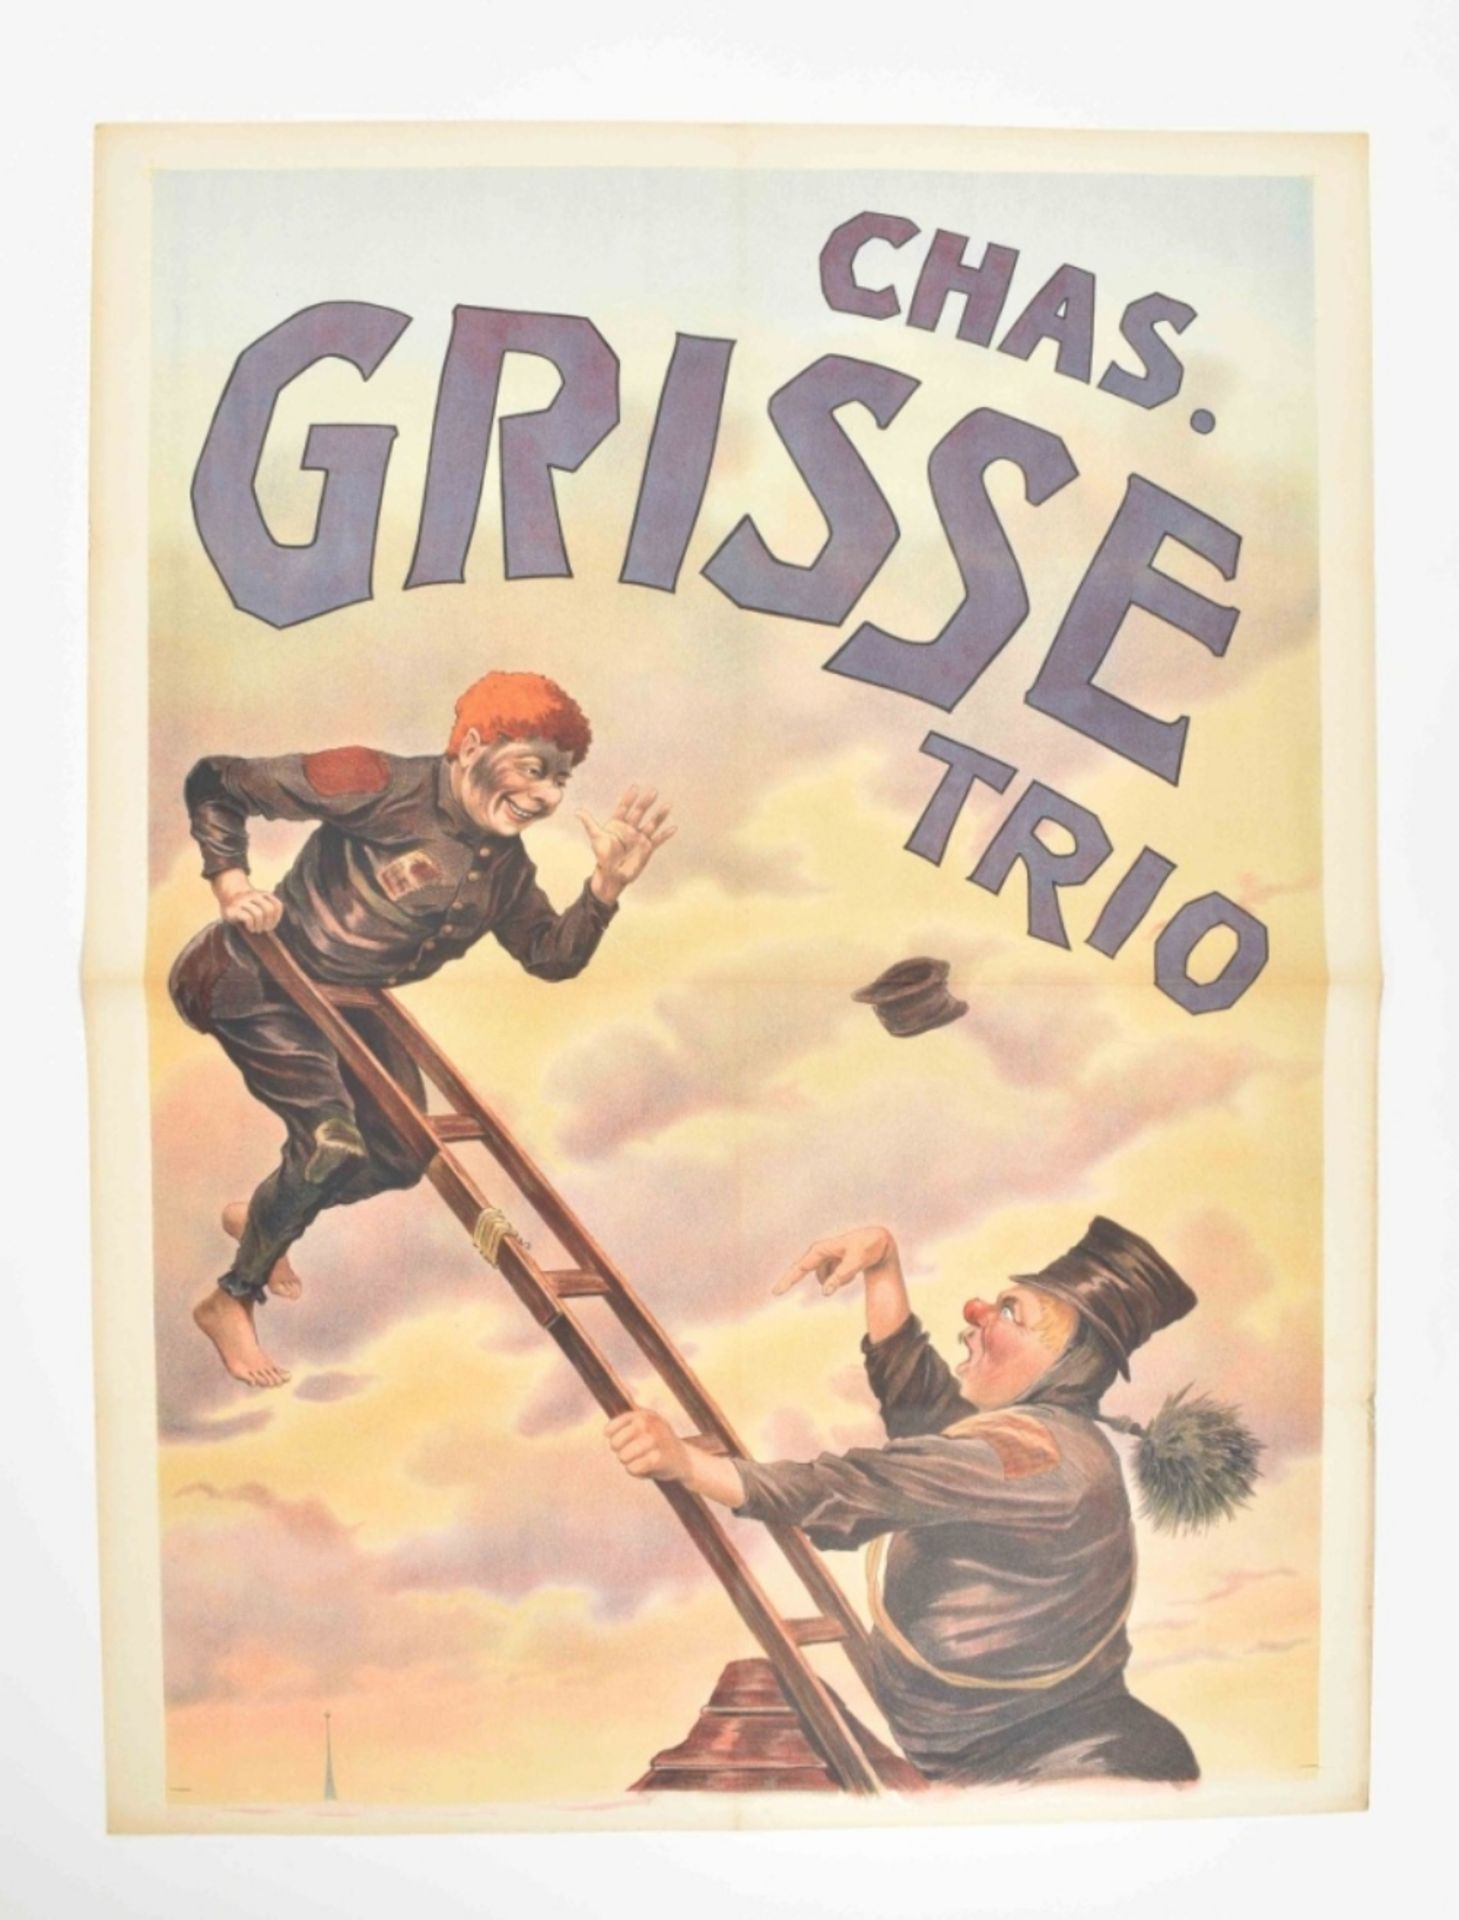 [Clowns] [Vaudeville. Chimney Sweepers. Acrobatics] Chas. Grisse trio Friedländer, Hamburg, 1907 - Image 2 of 7